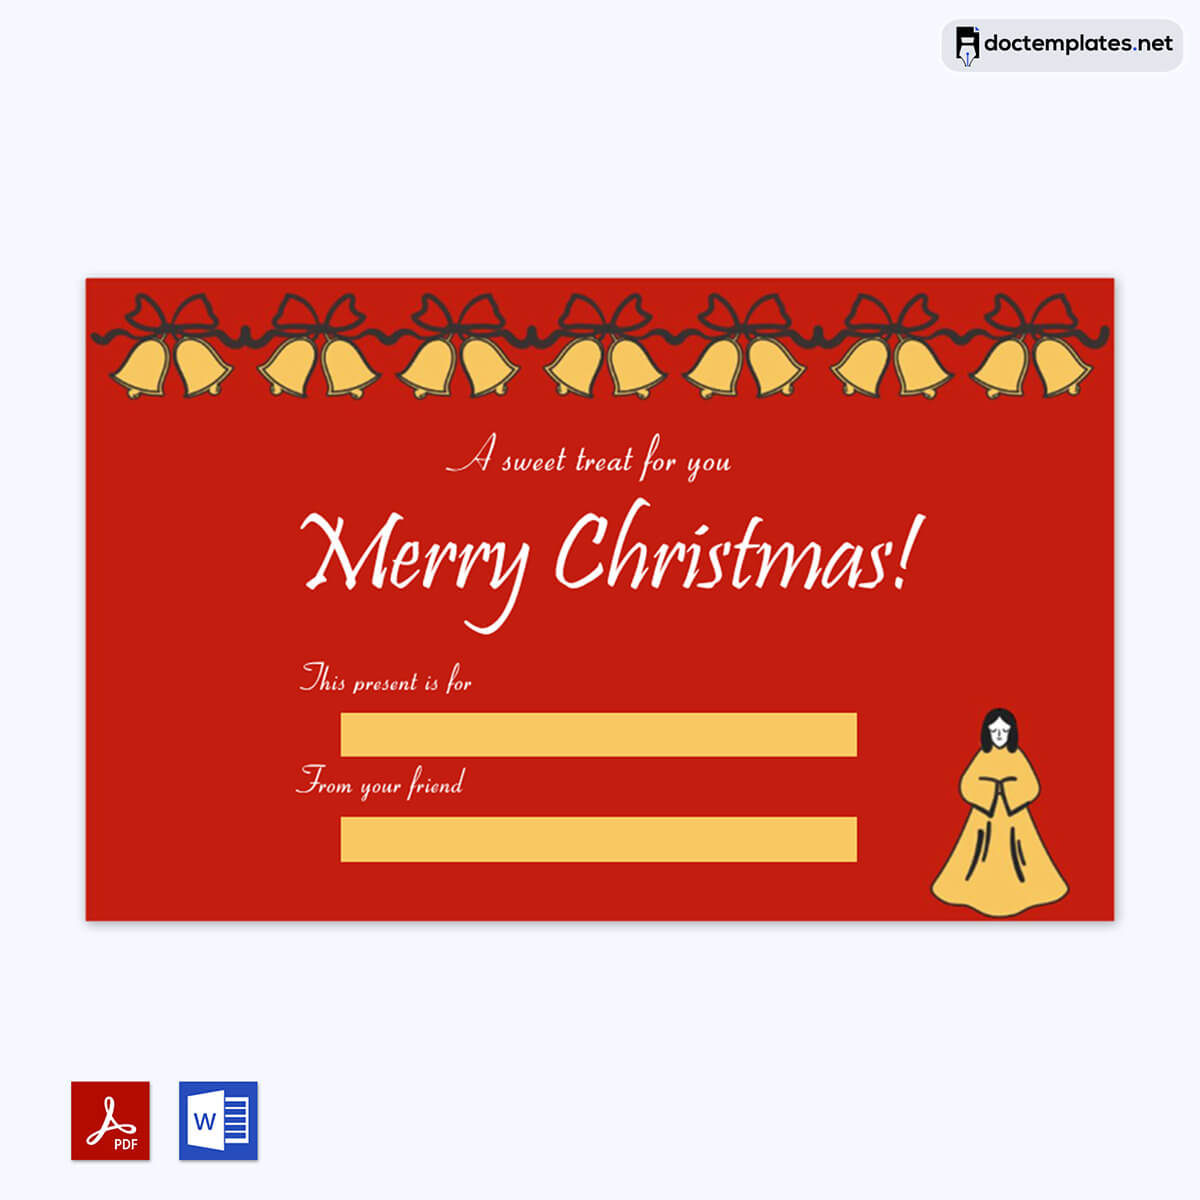 Image of Free printable gift tags templates
Free printable gift tags templates
